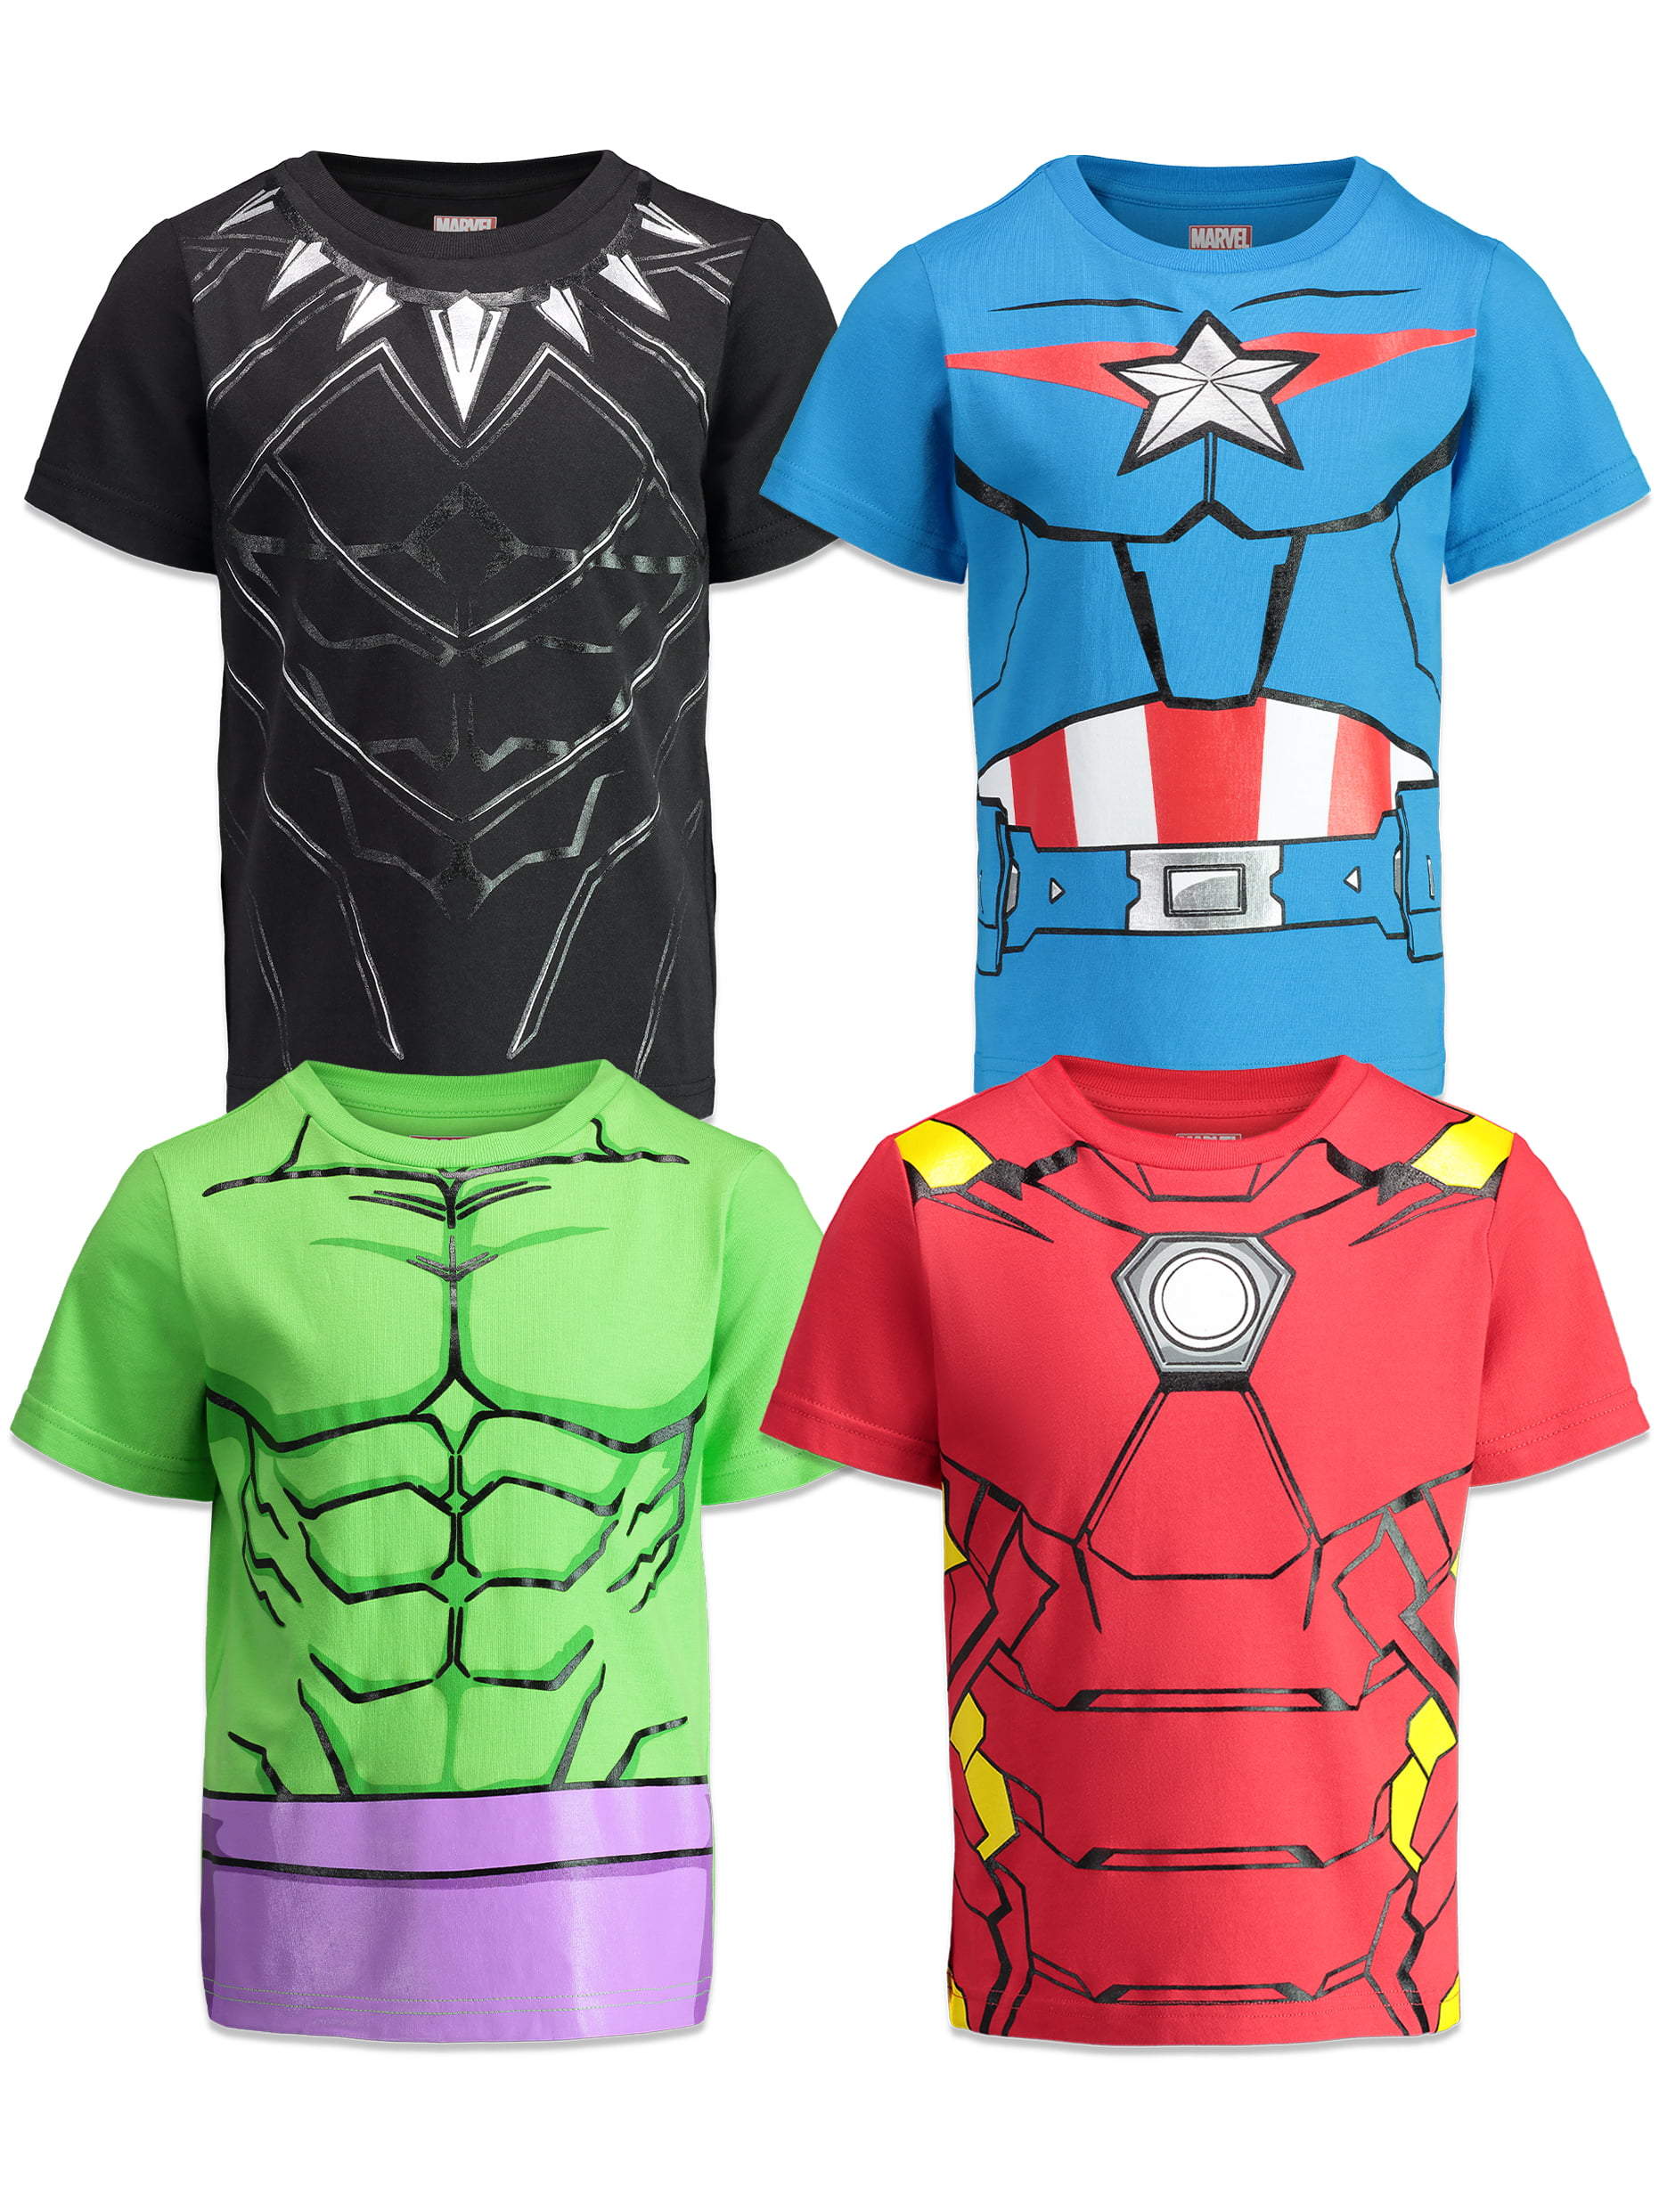 The Avengers Marvel Avengers Boys 4 Pack T Shirts Black Panther Hulk Iron Man Captain America 16 Walmart Com Walmart Com - black panther hat roblox